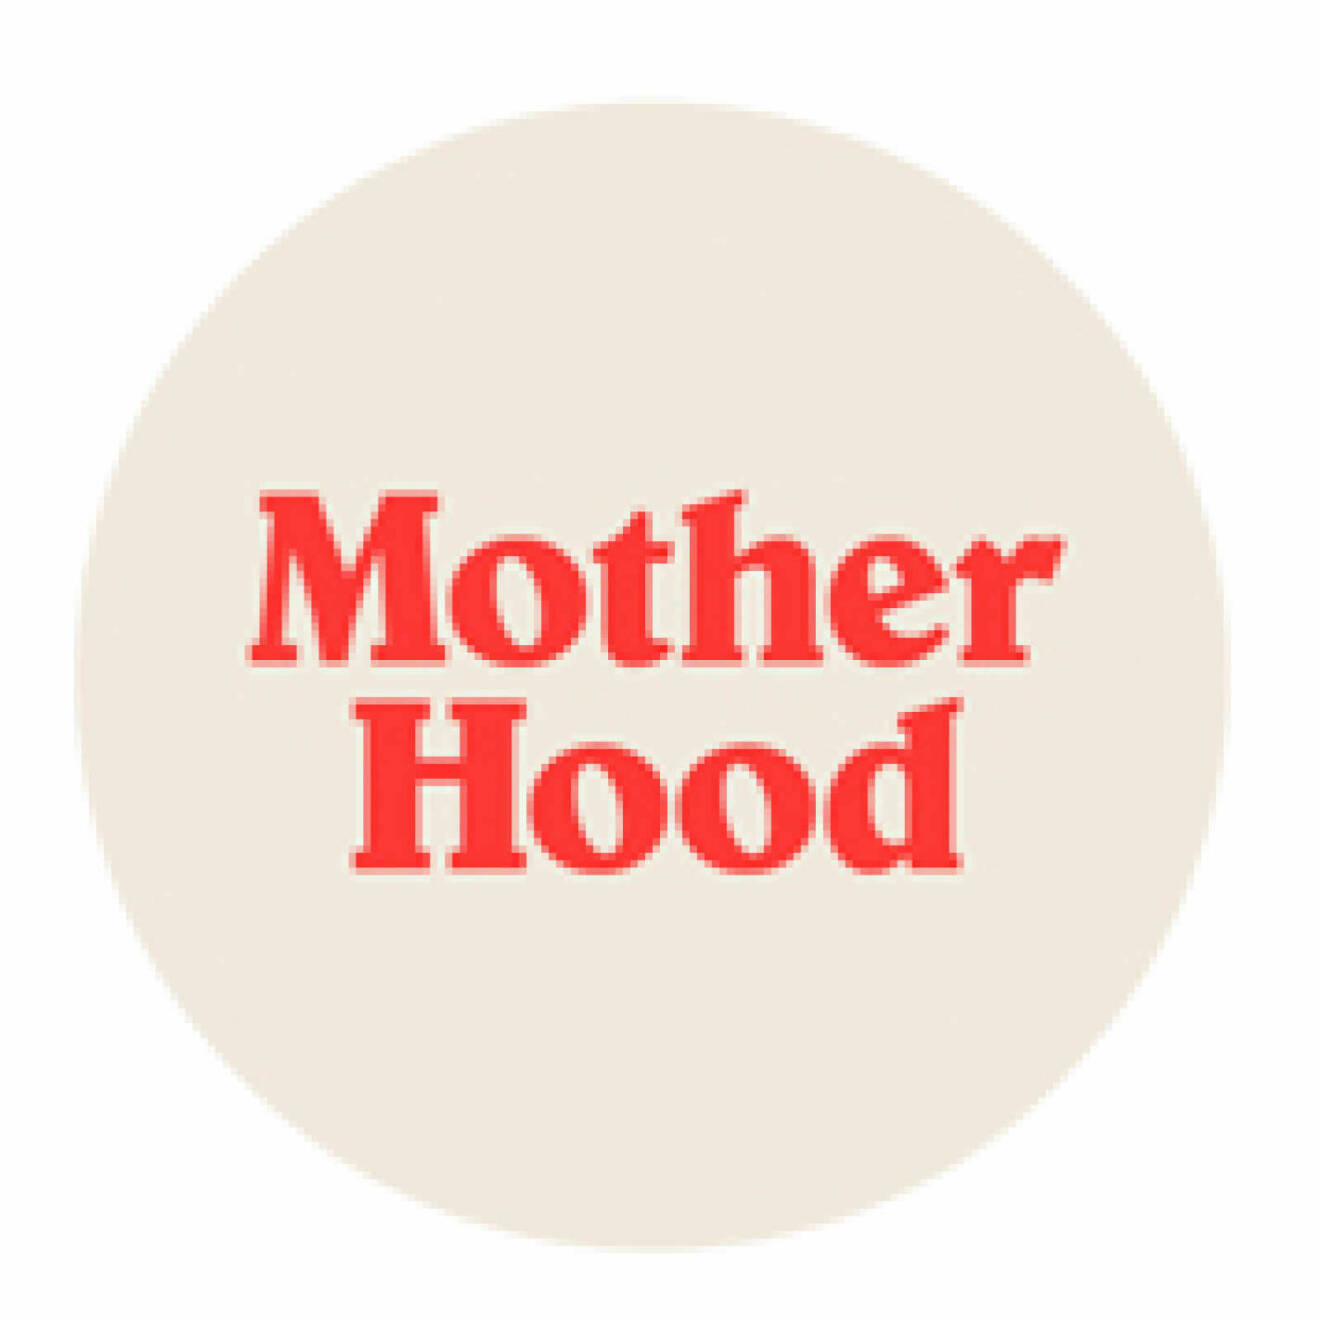 https://image.motherhood.se/motherhood-logo-biline.jpg?imageId=6441816&x=0&y=0&cropw=100&croph=100&width=1318&height=1318